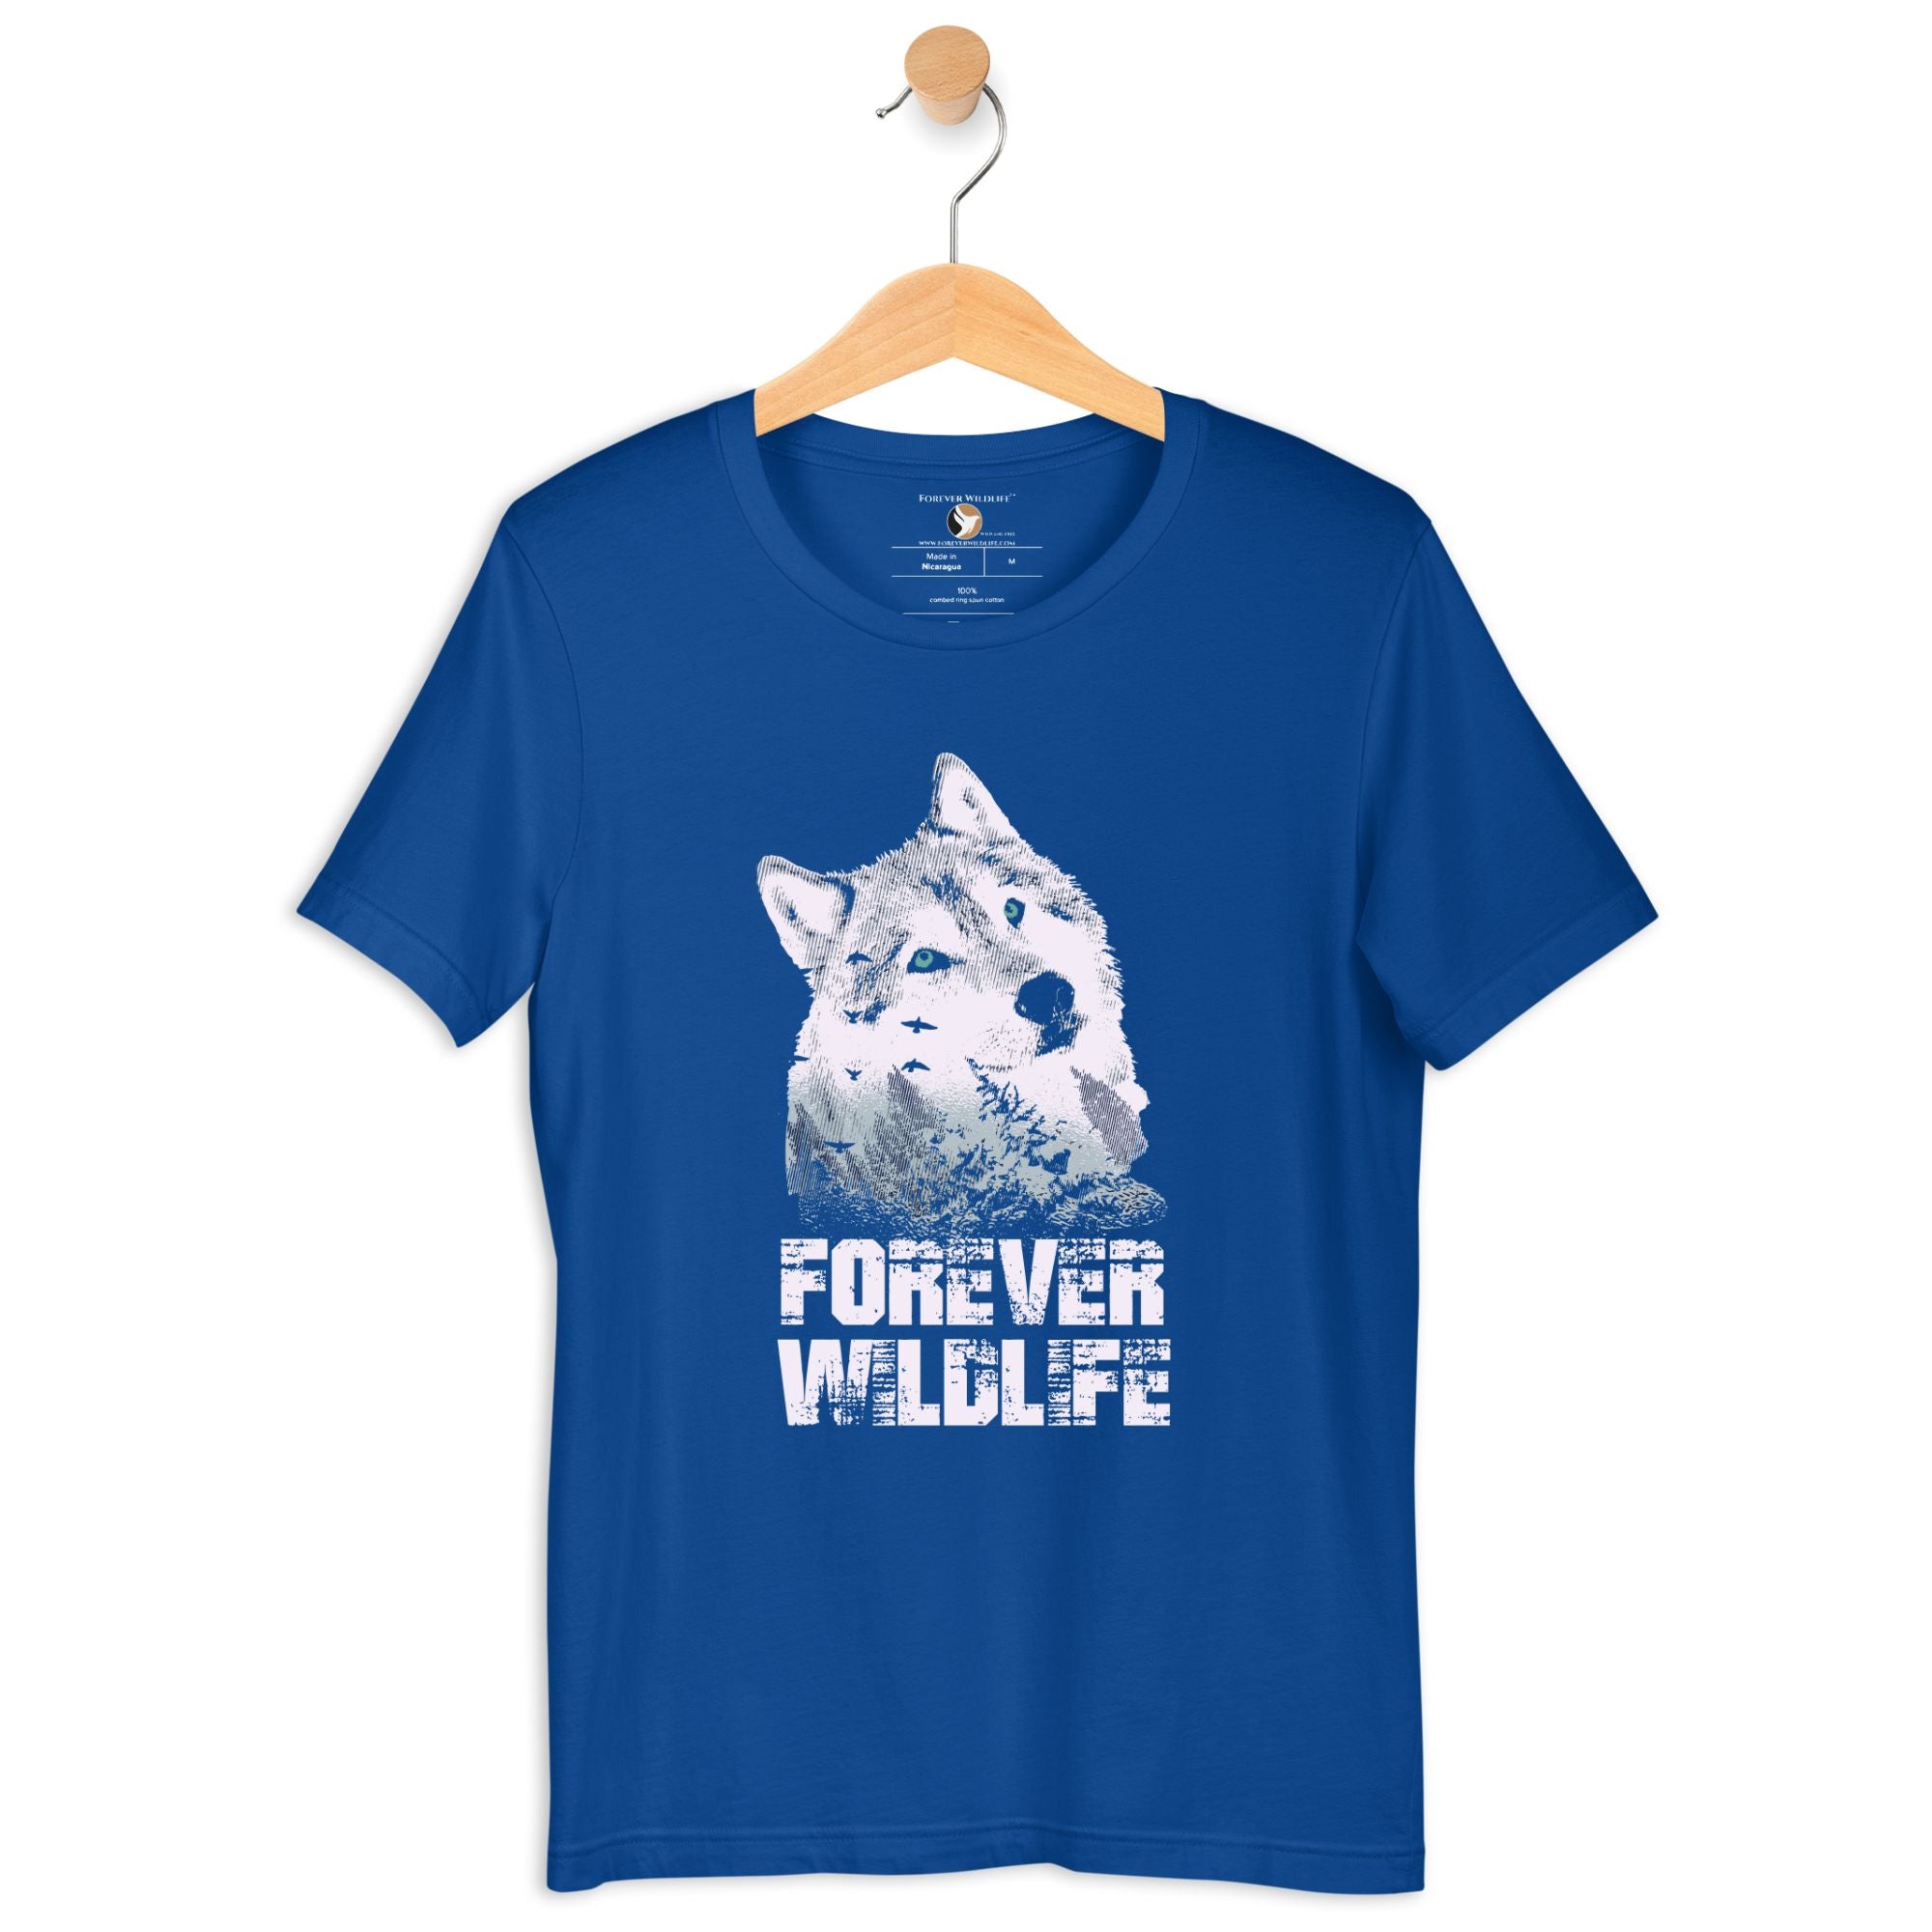 Wolf T-Shirt in True Royal – Premium Wildlife T-Shirt Design, Wildlife Clothing & Apparel from Forever Wildlife